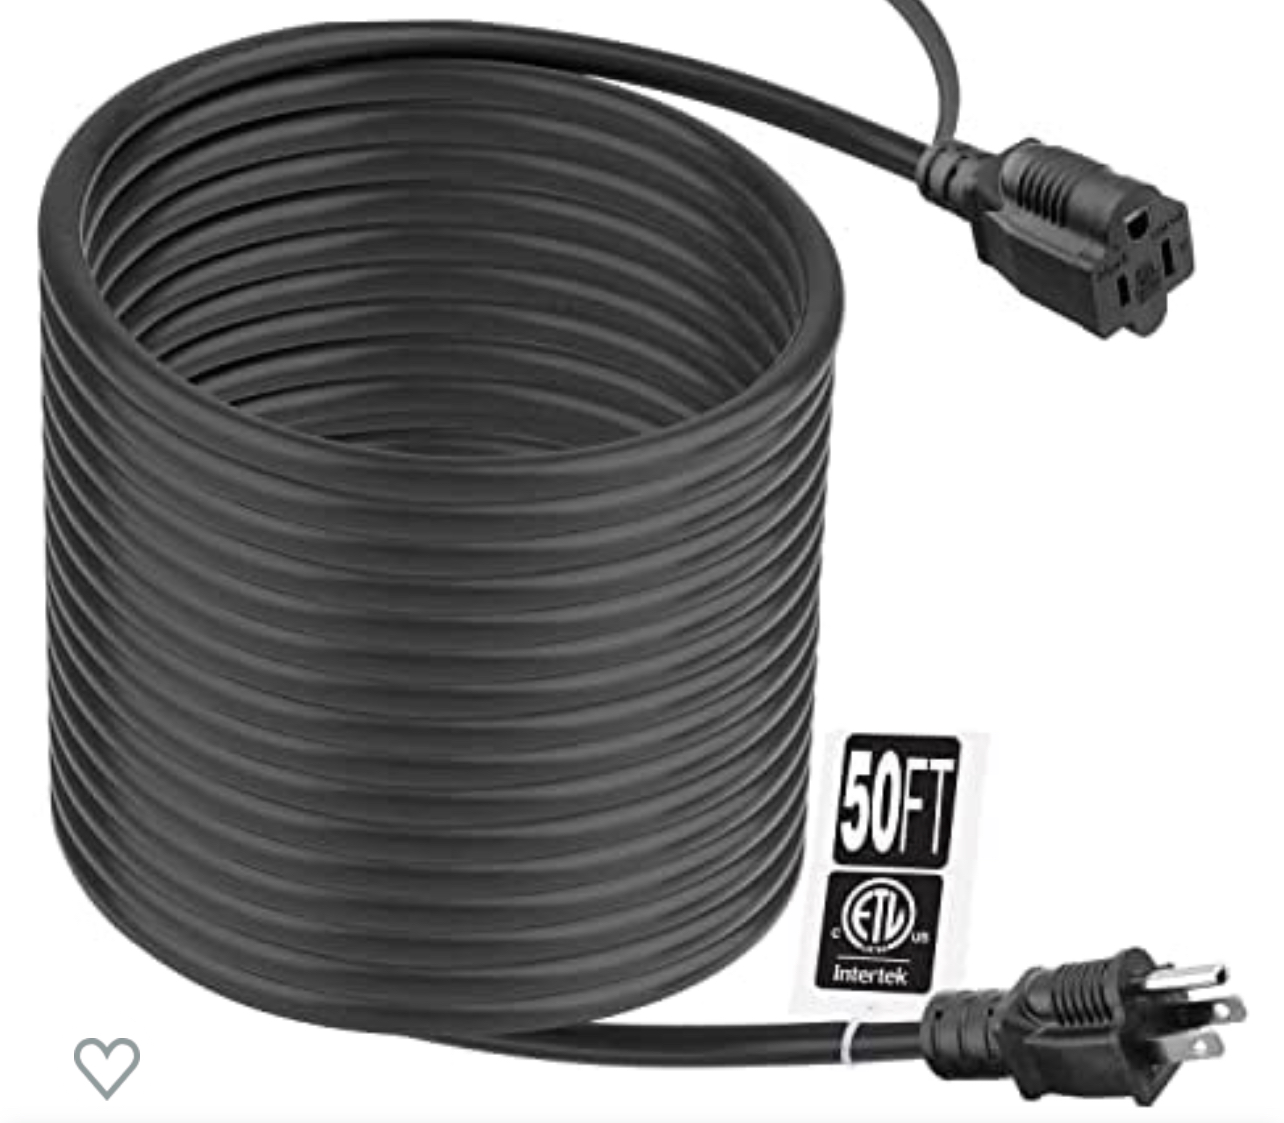 Black 50′ extension cord